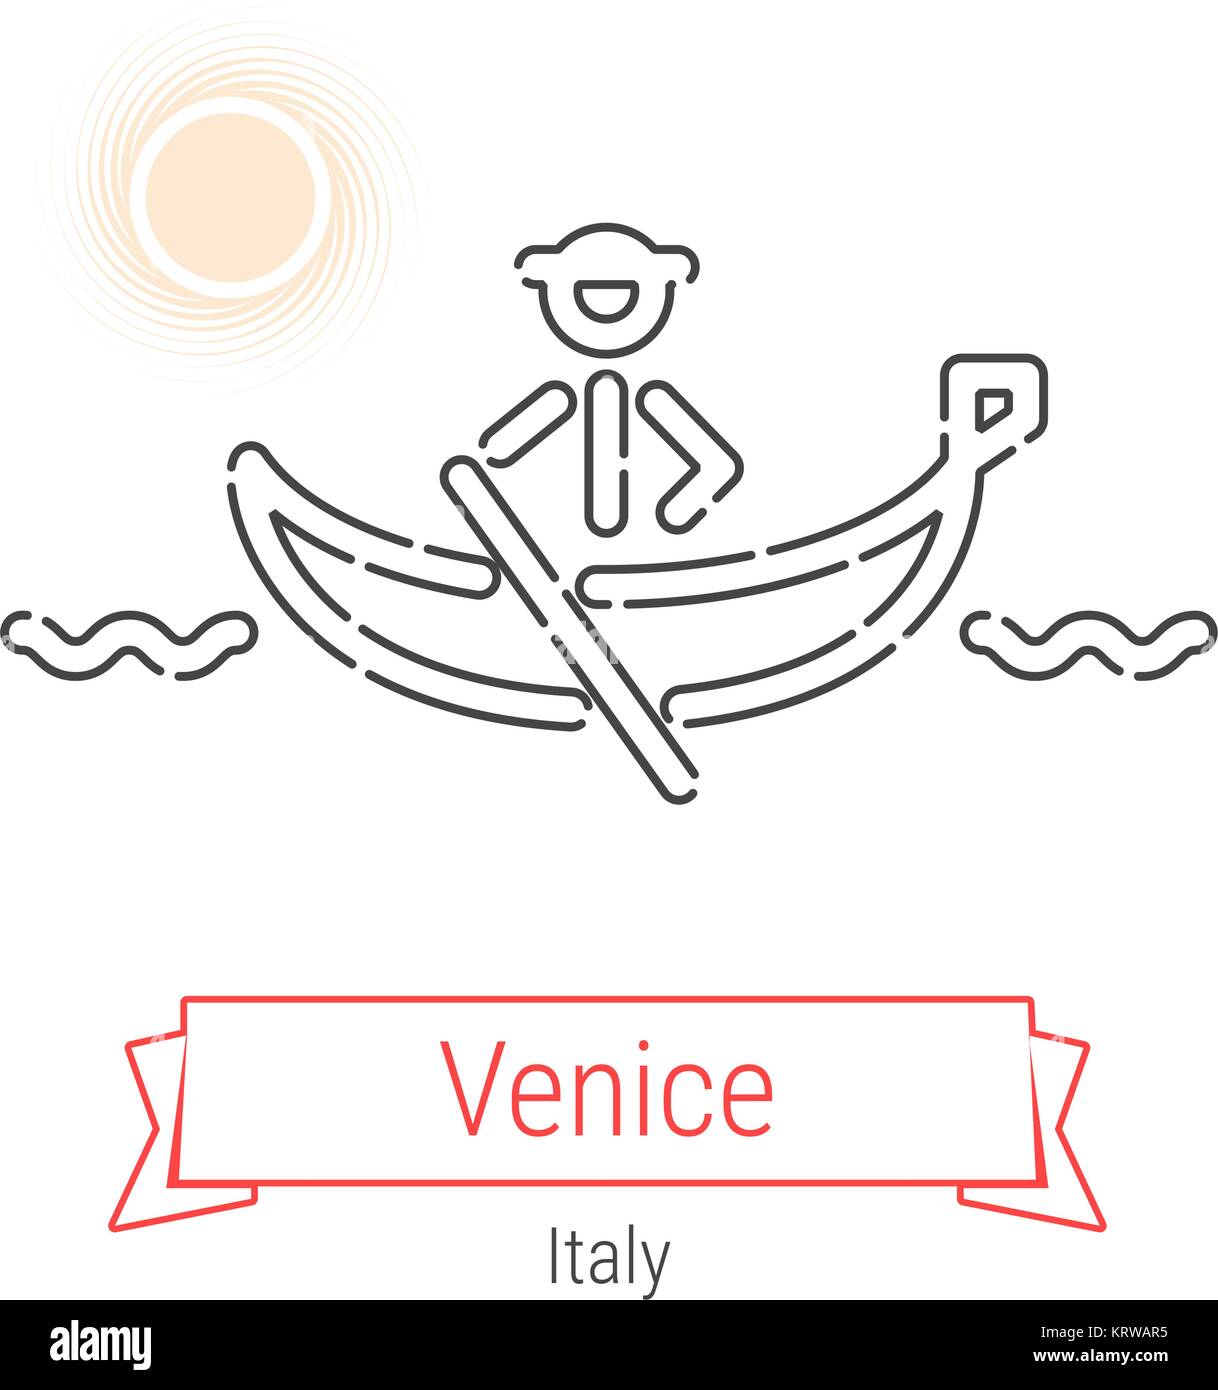 Venice, Italy Vector Line Icon with Red Ribbon Isolated on White. Venice Landmark - Emblem - Print - Label - Symbol. Venice Gondola Pictogram Stock Vector